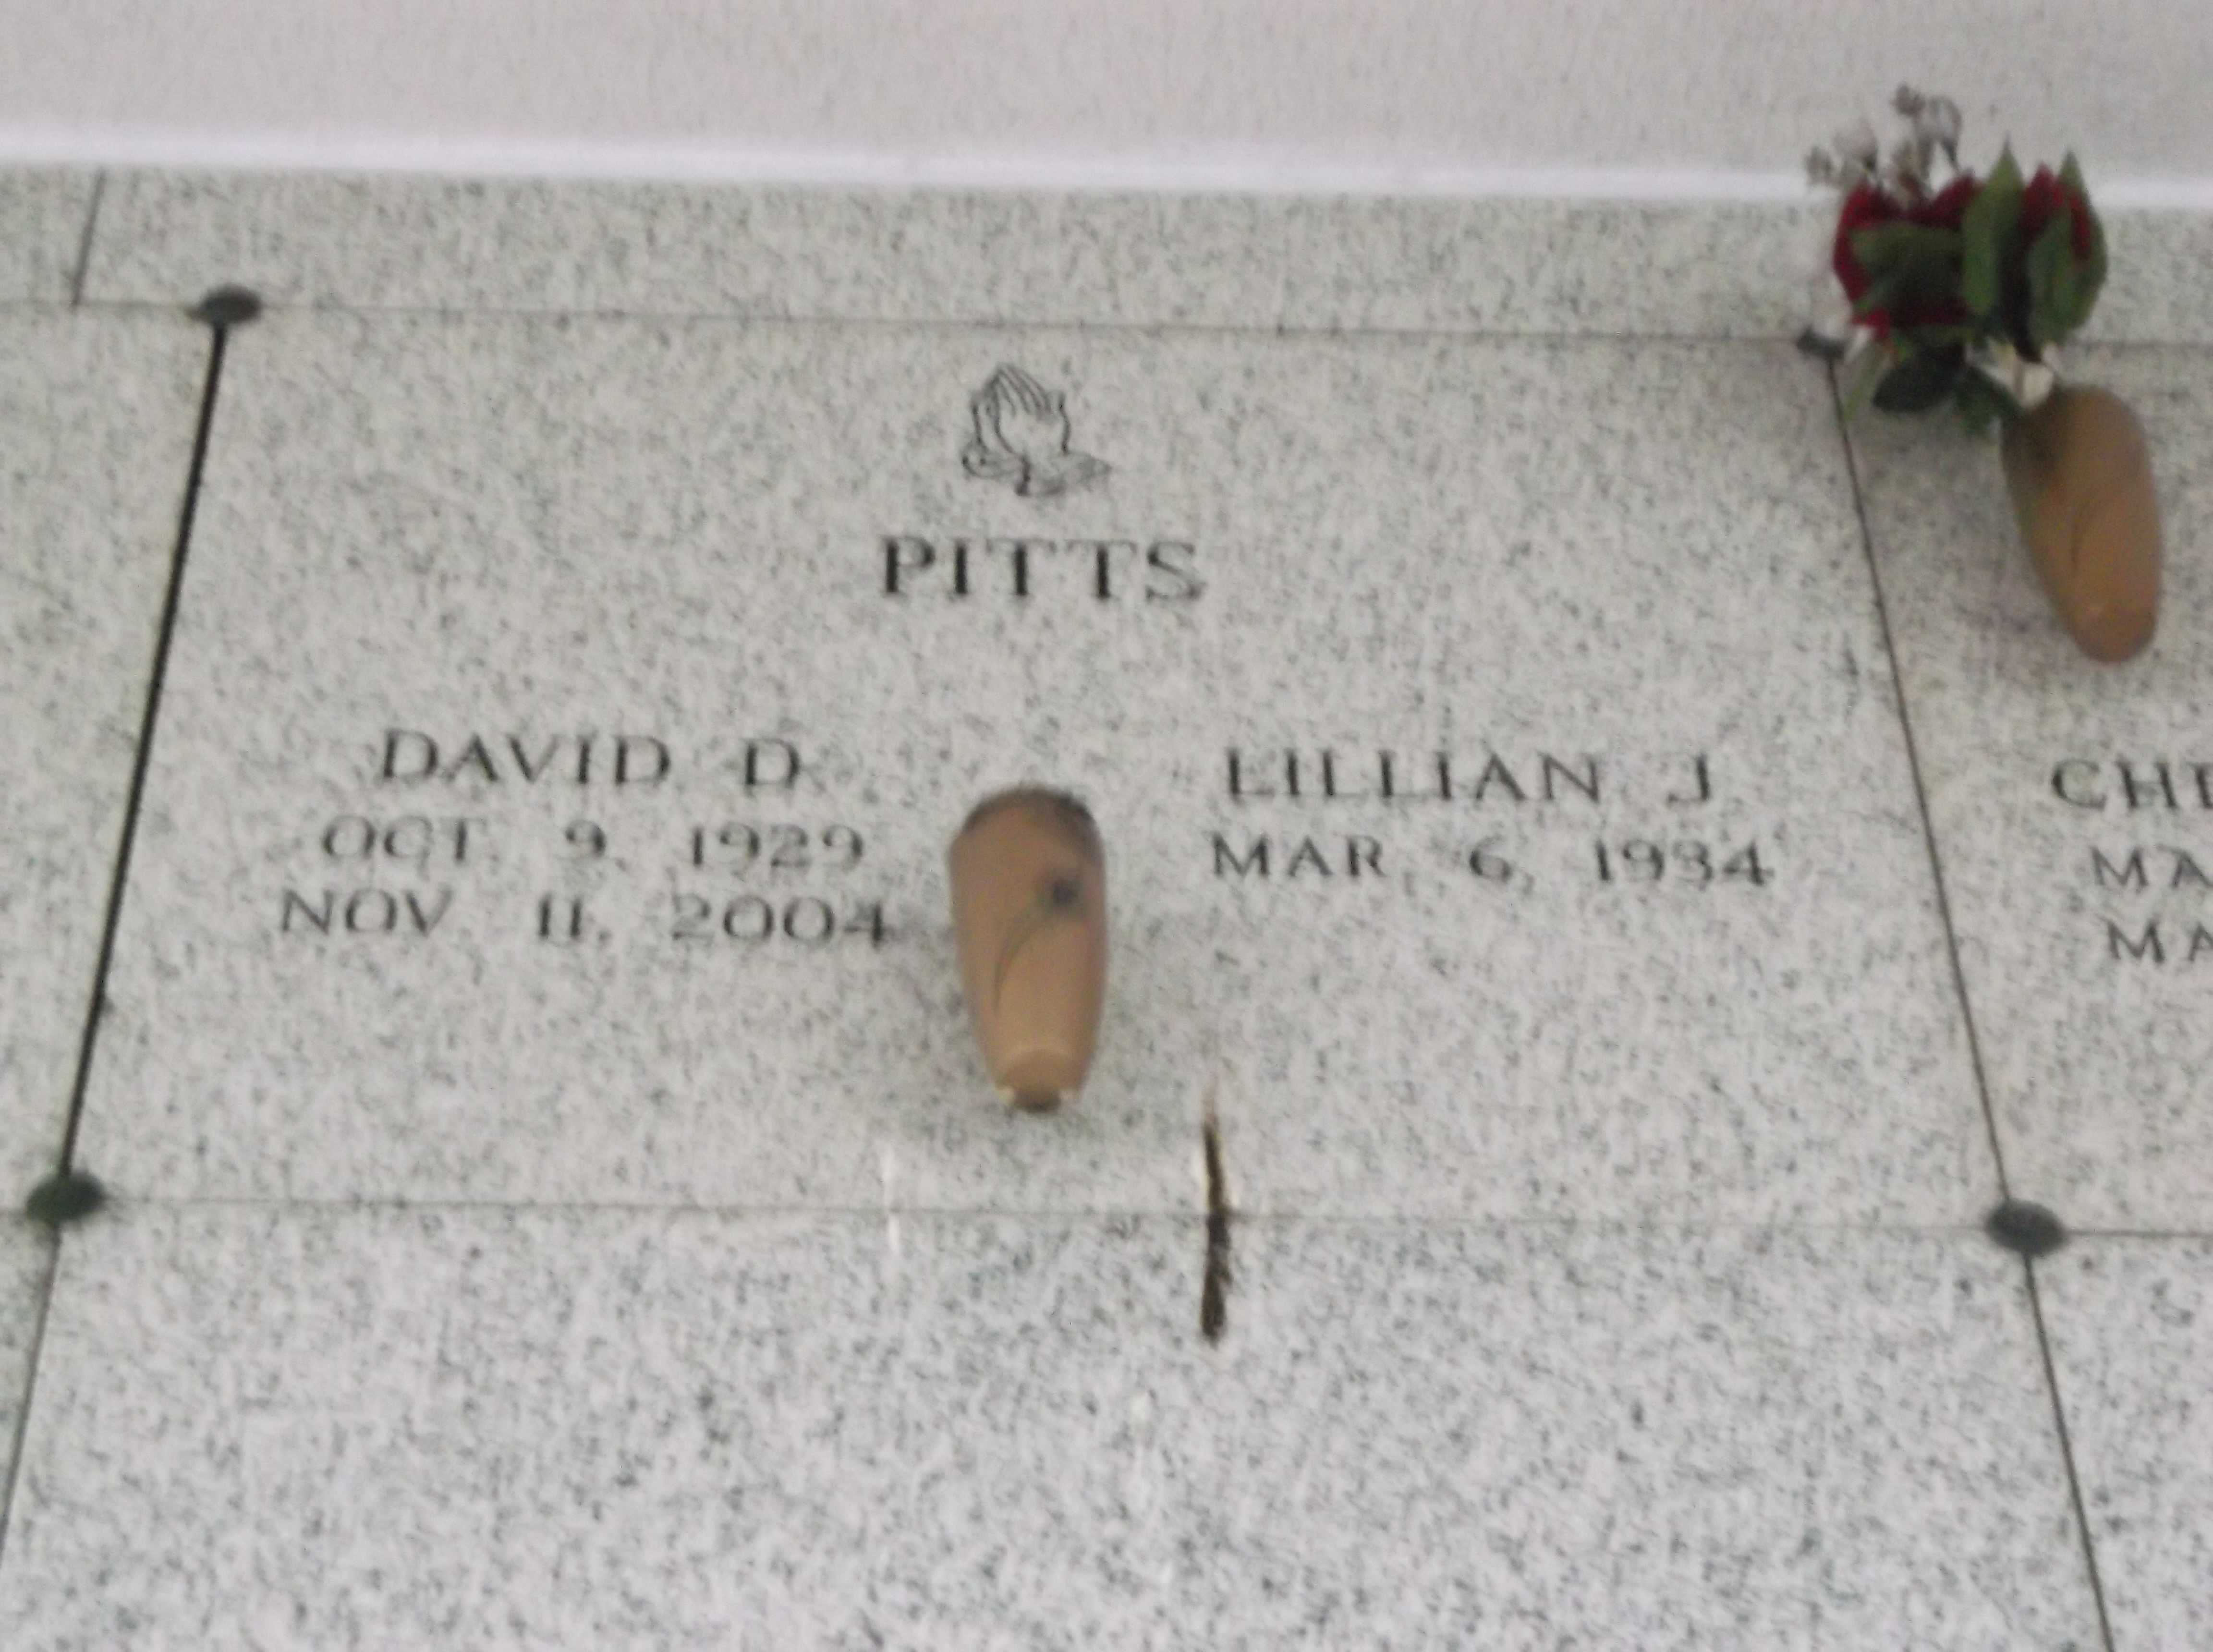 David D Pitts